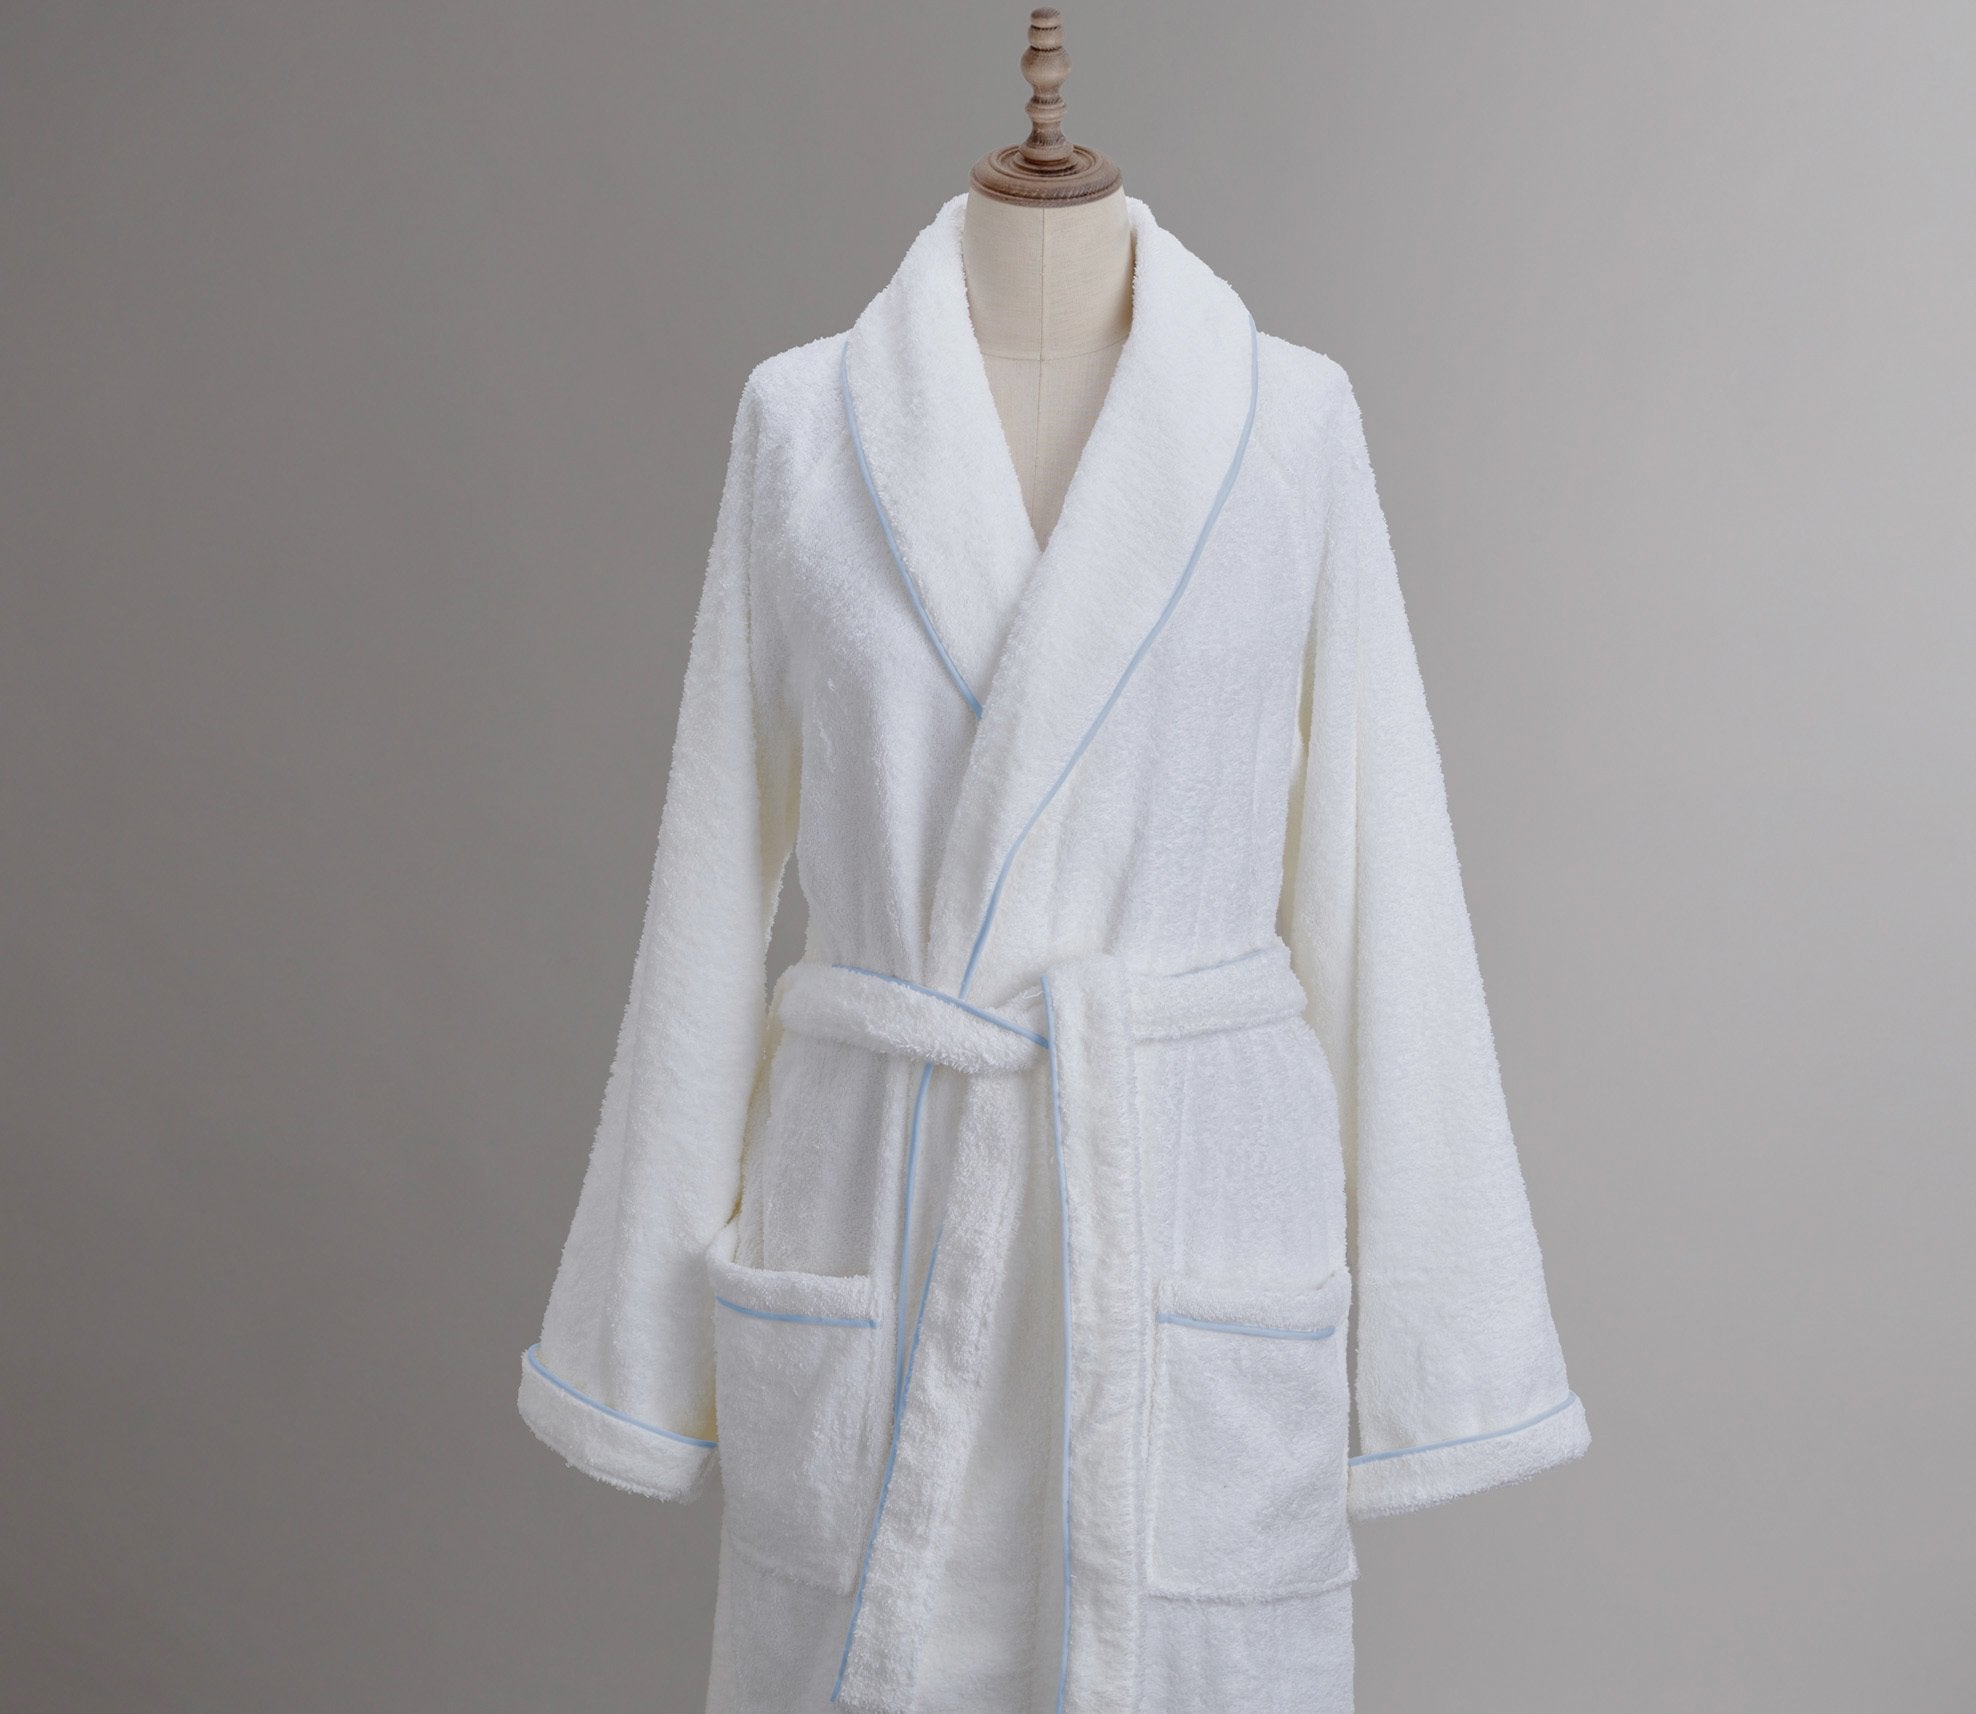 Cairo Robe White with Custom Trim Product Image 1